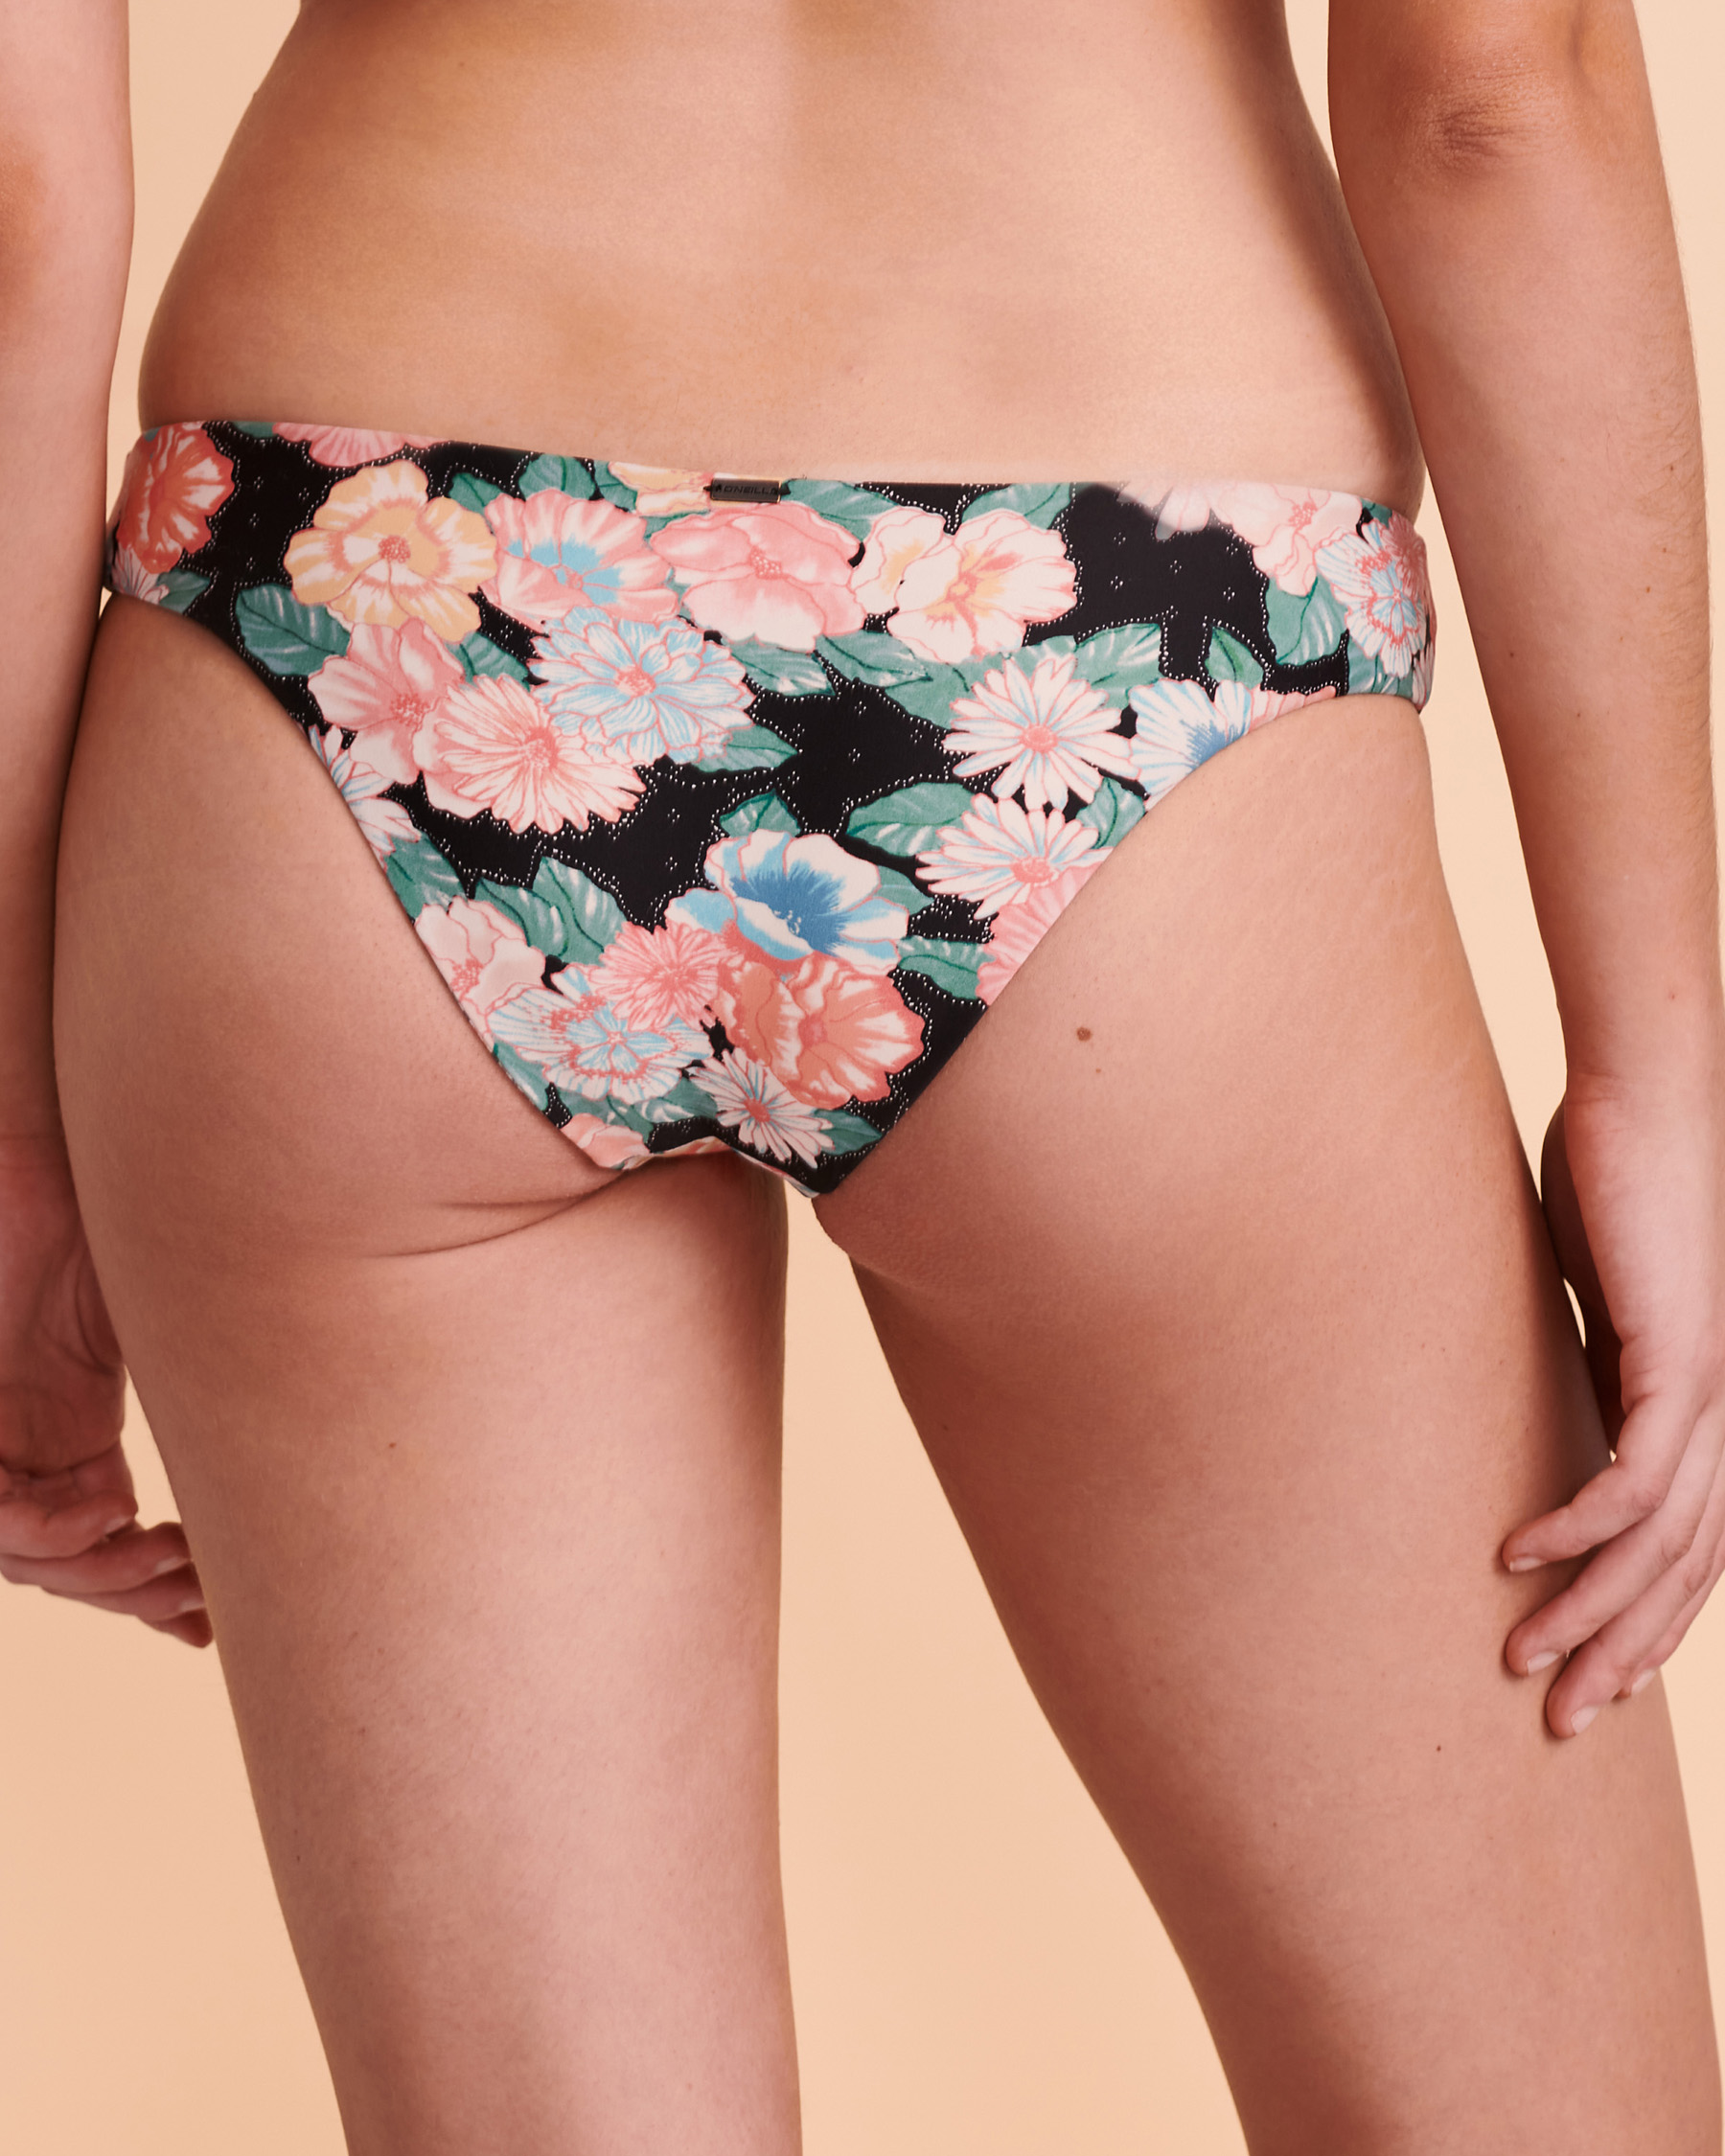 O'NEILL EMILIE FLORAL Matira Reversible Cheeky Bikini Bottom Floral HO1474004 - View7